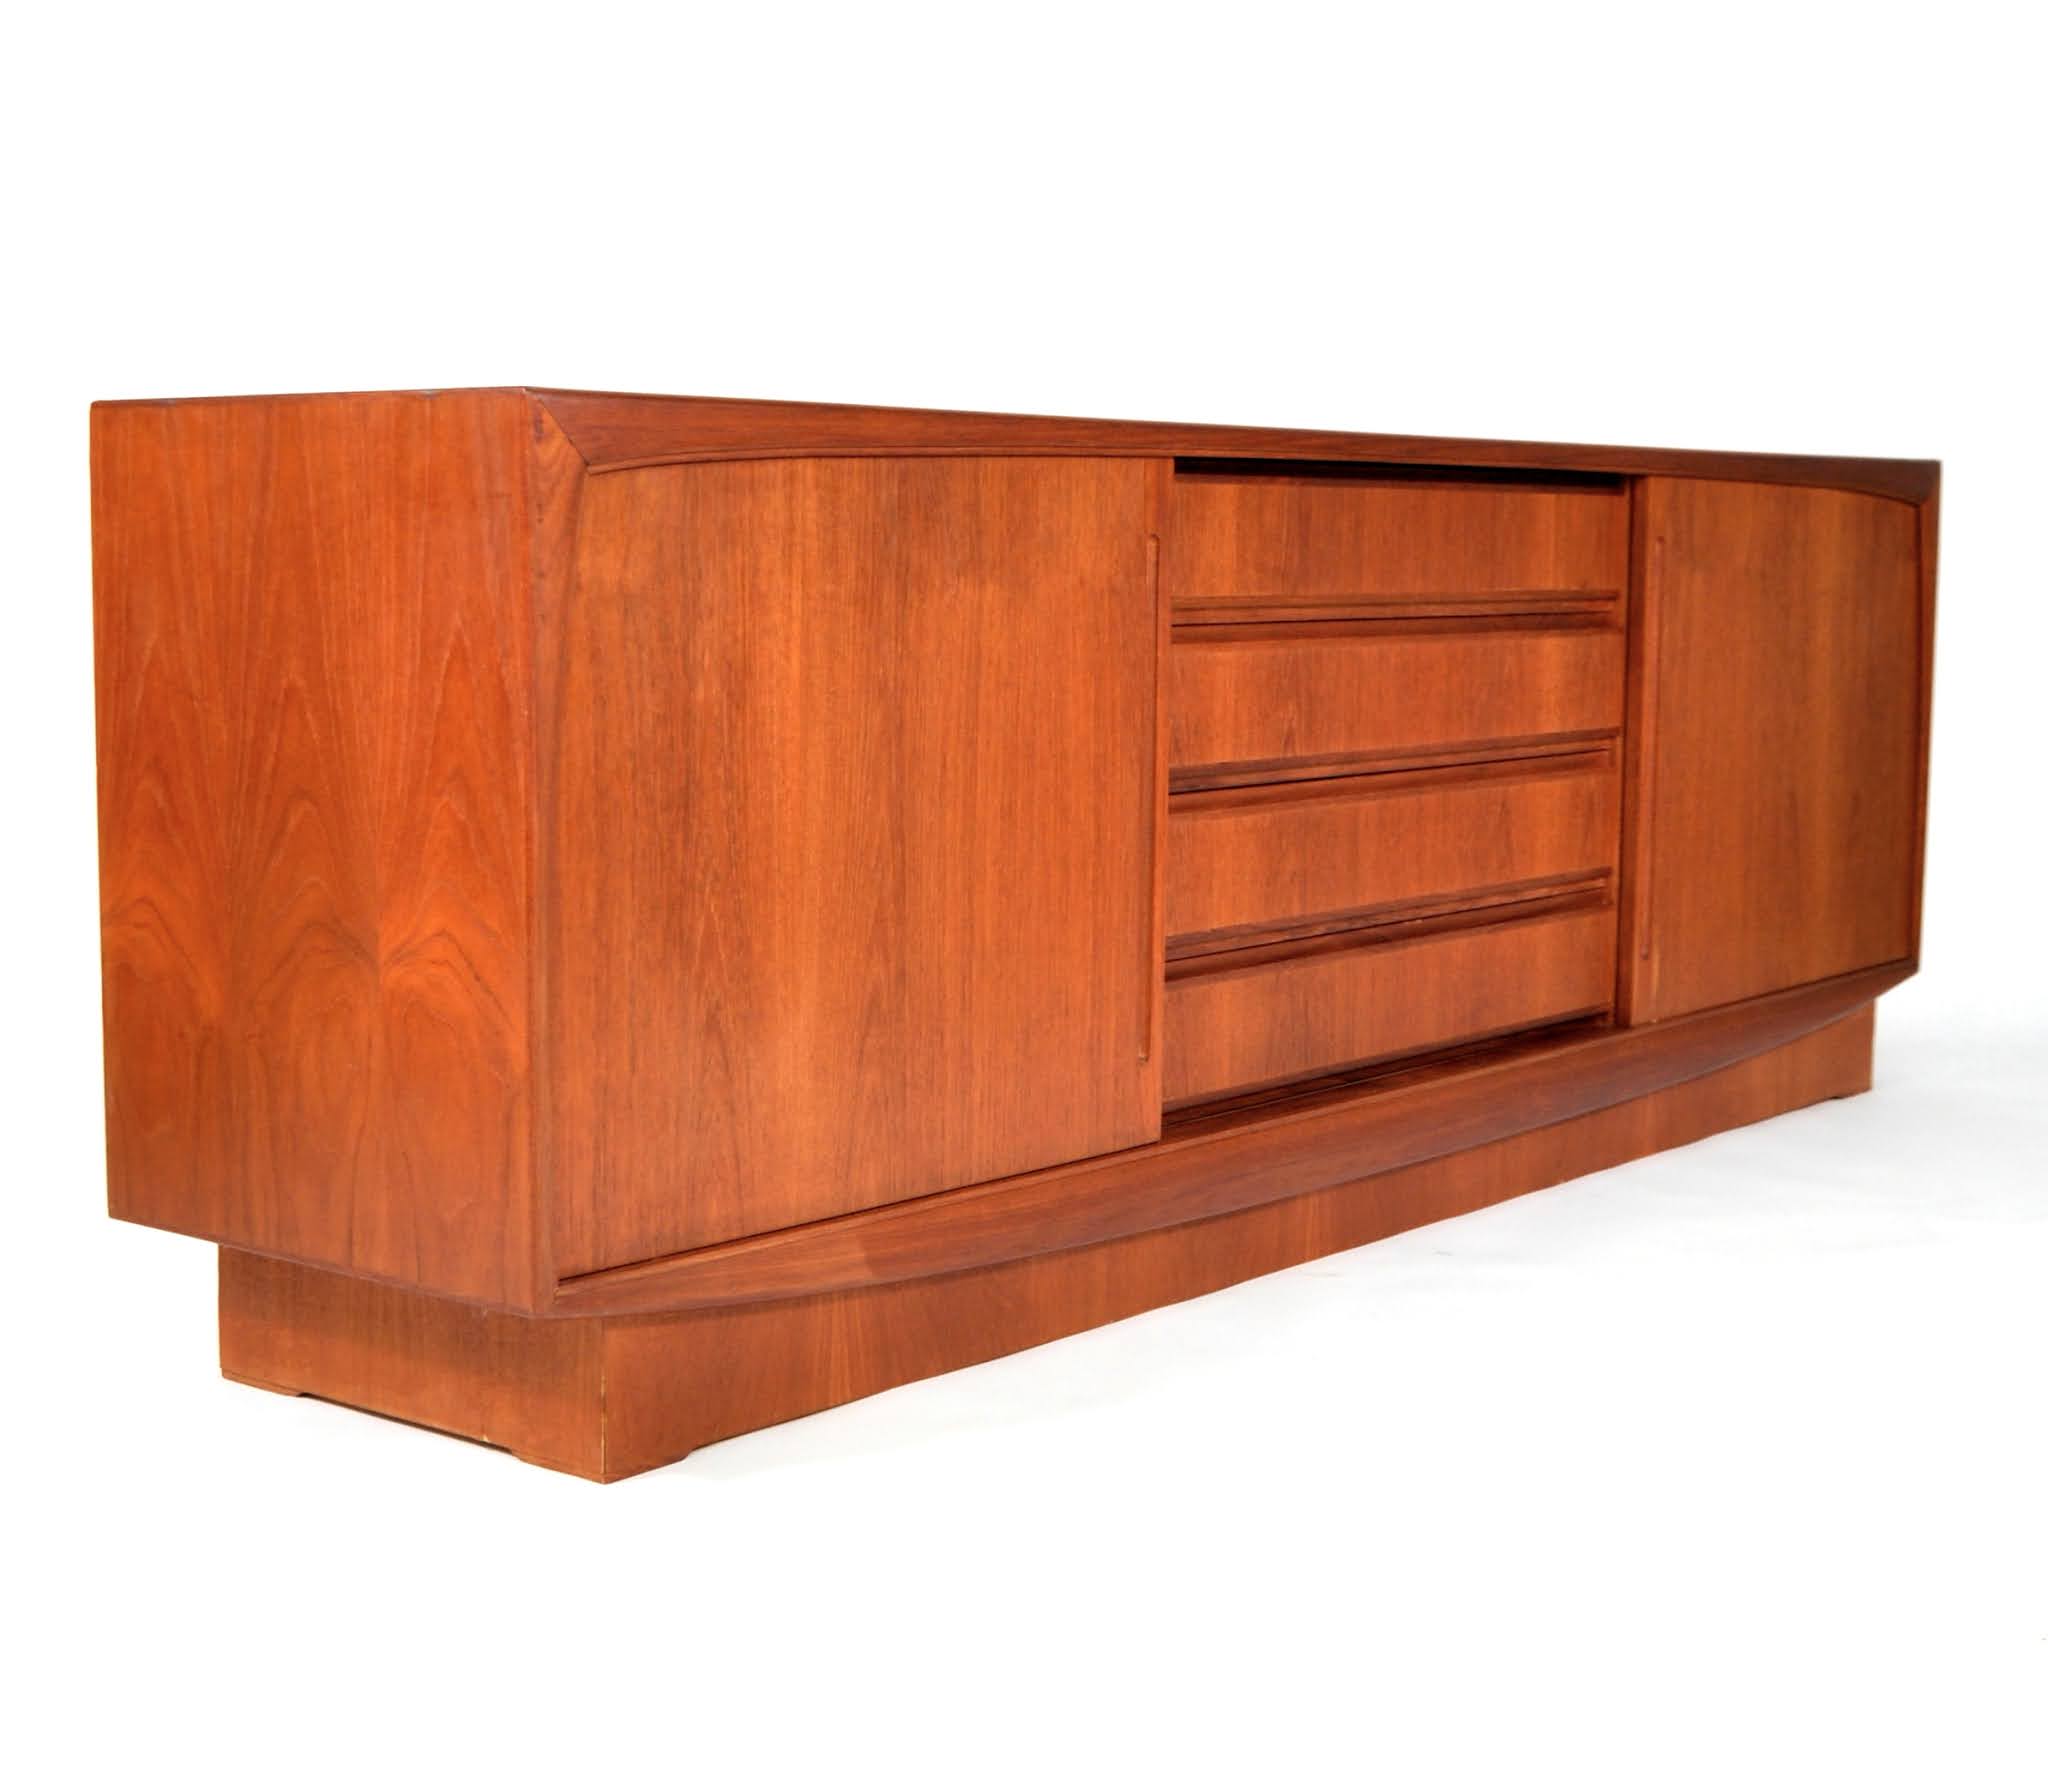 Select Modern Danish Mid Century Modern Teak Credenza Bar Cabinet Sideboard Or Buffet